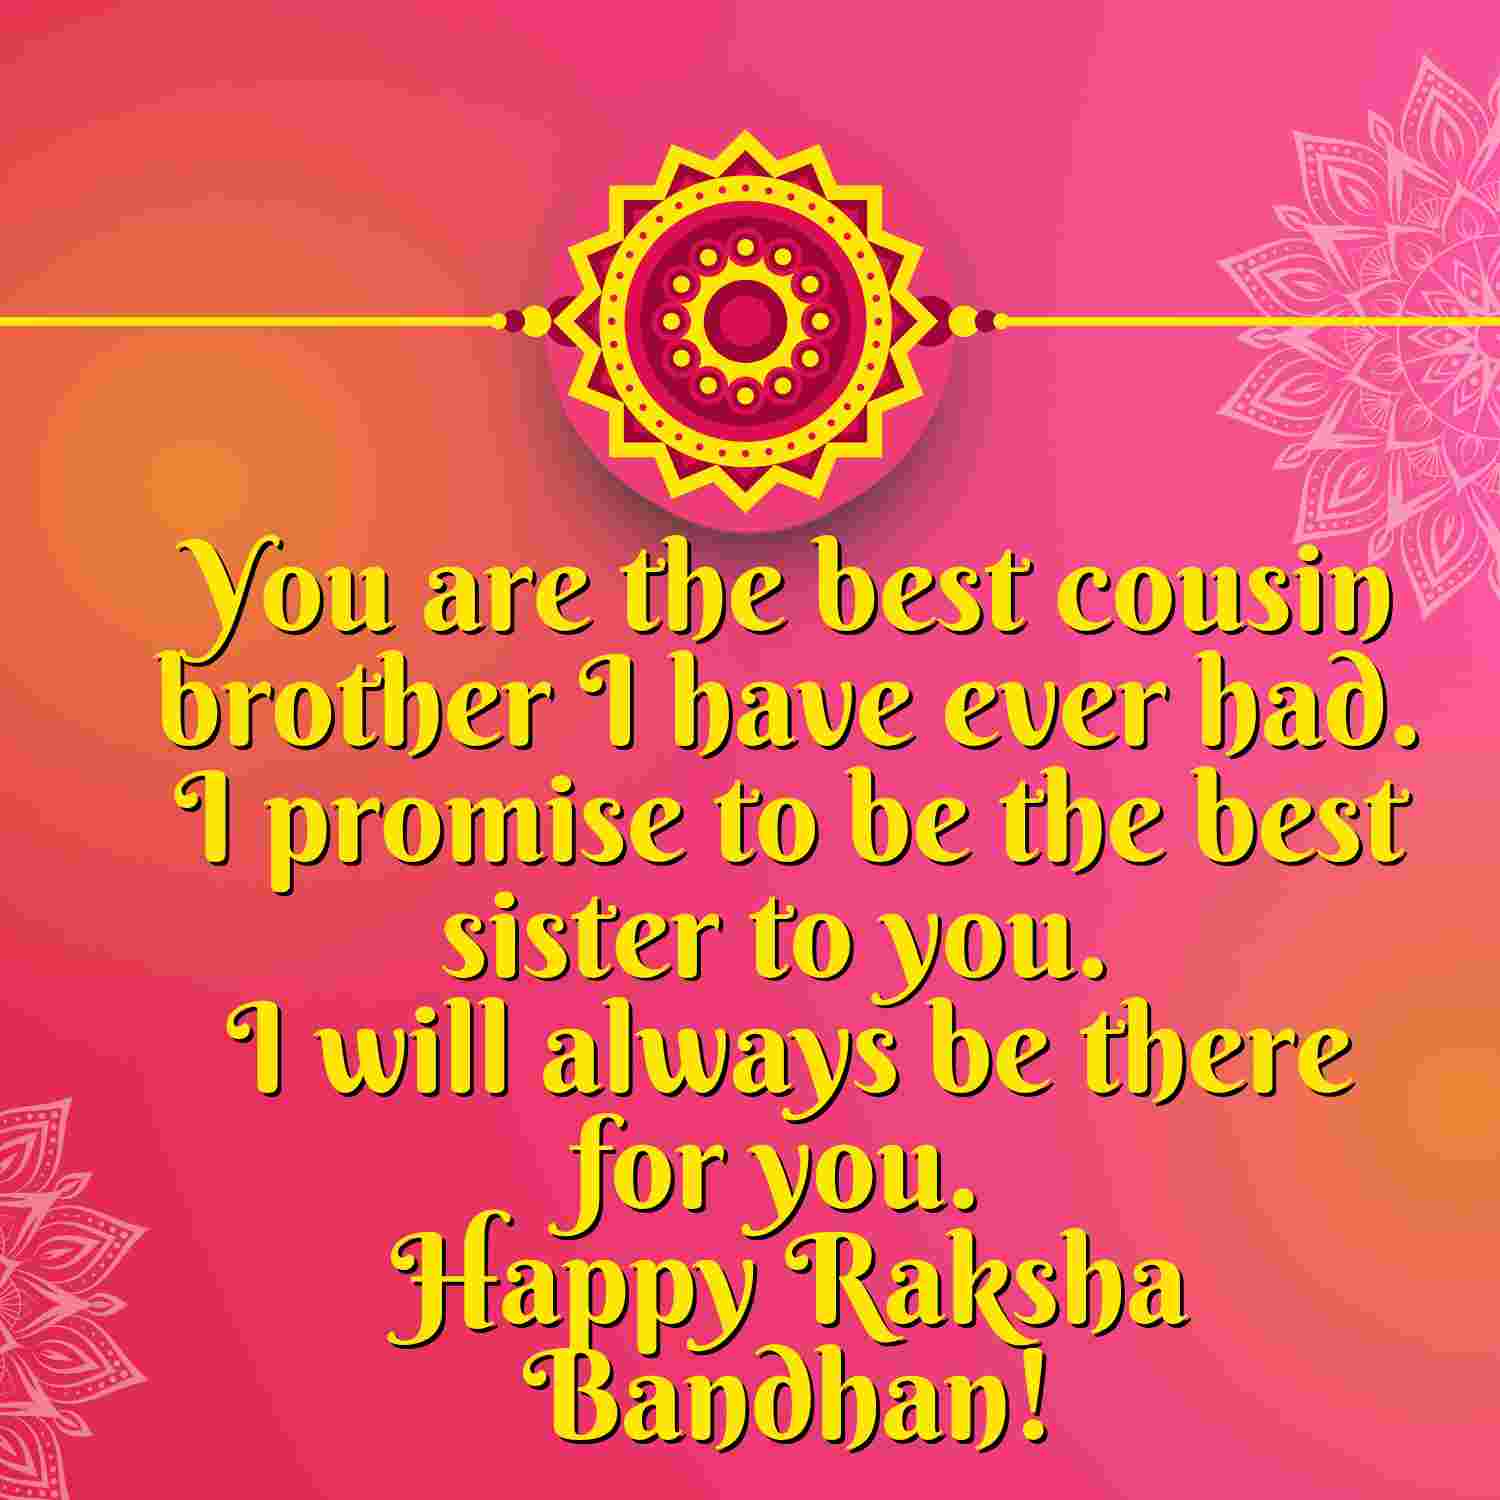 Raksha Bandhan Quotes for Cousin Brother